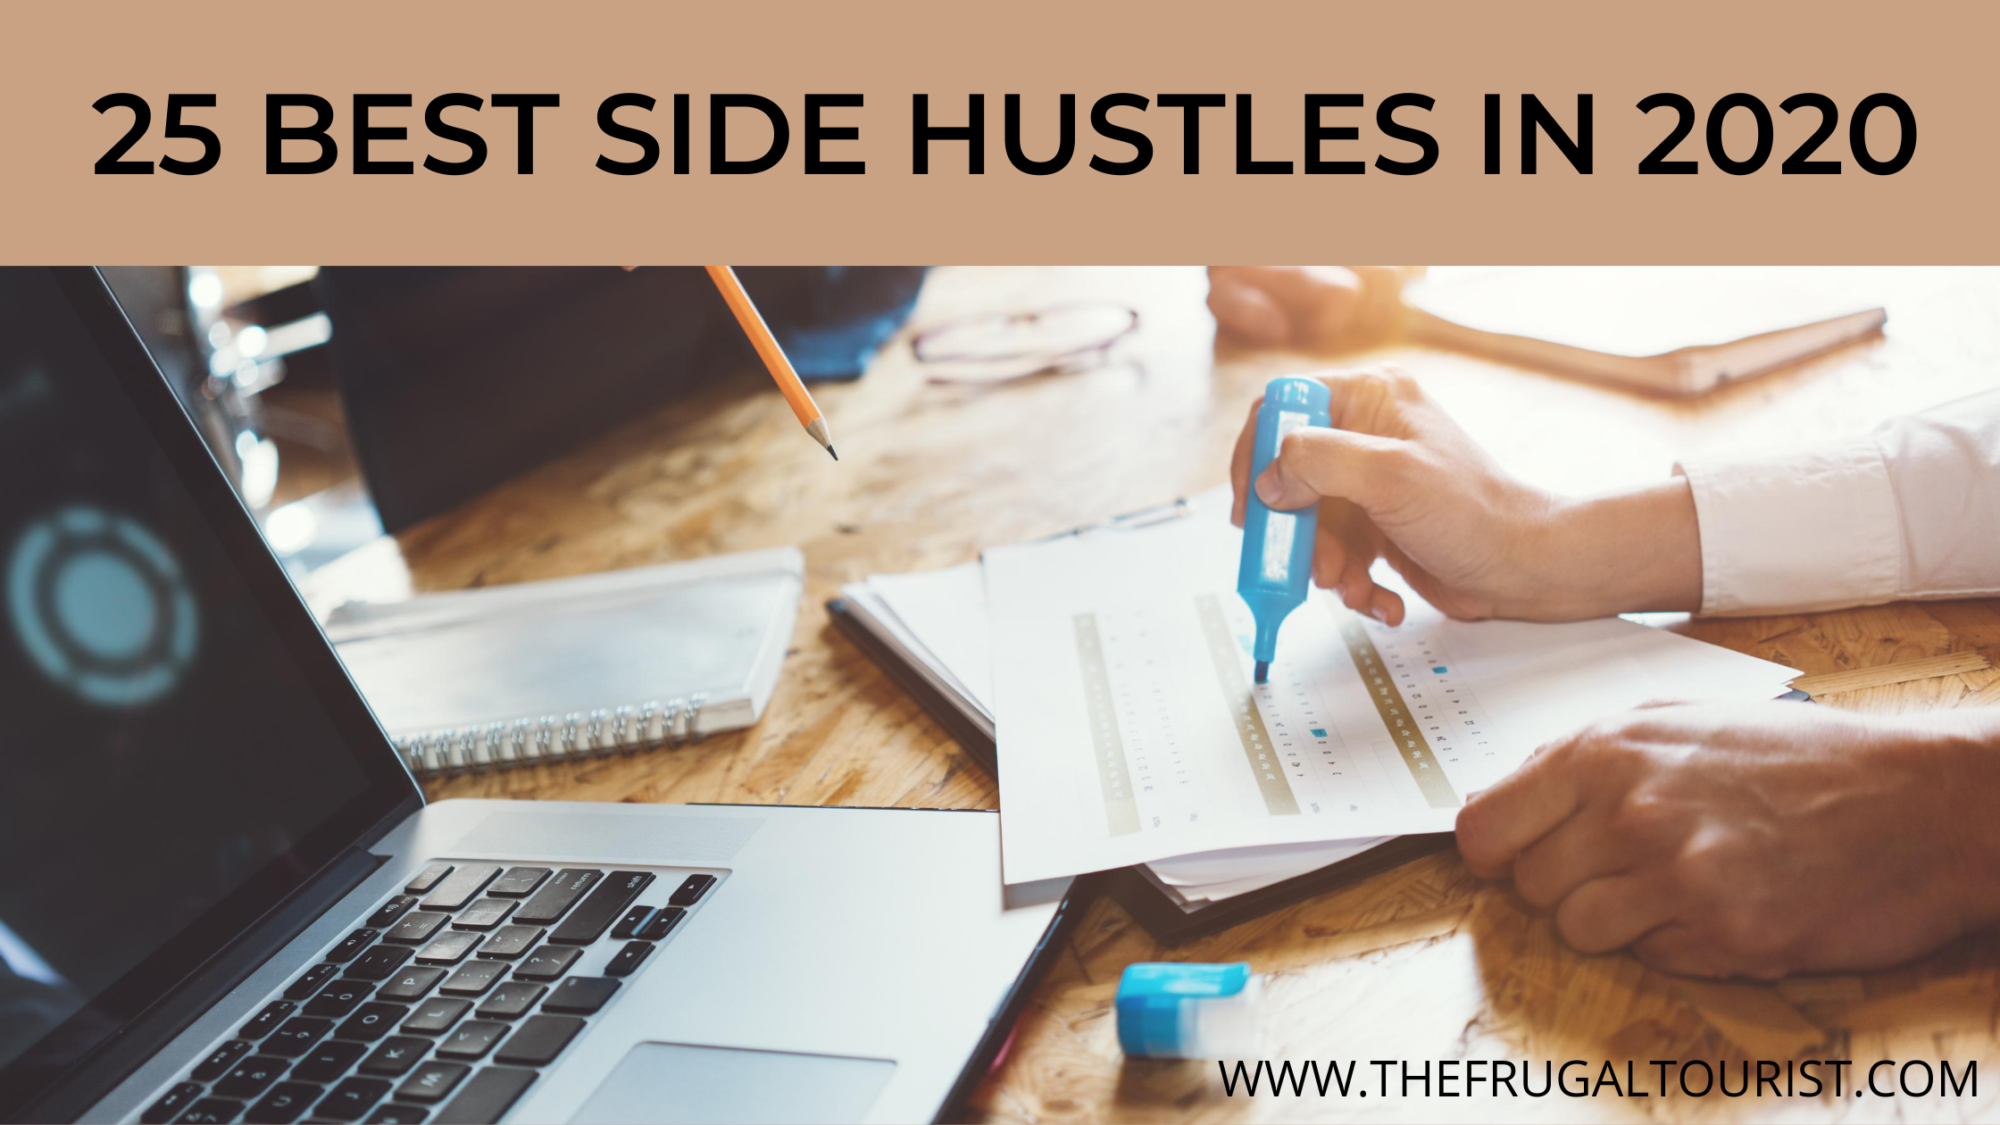 Guide on the 25 Best Side Hustles